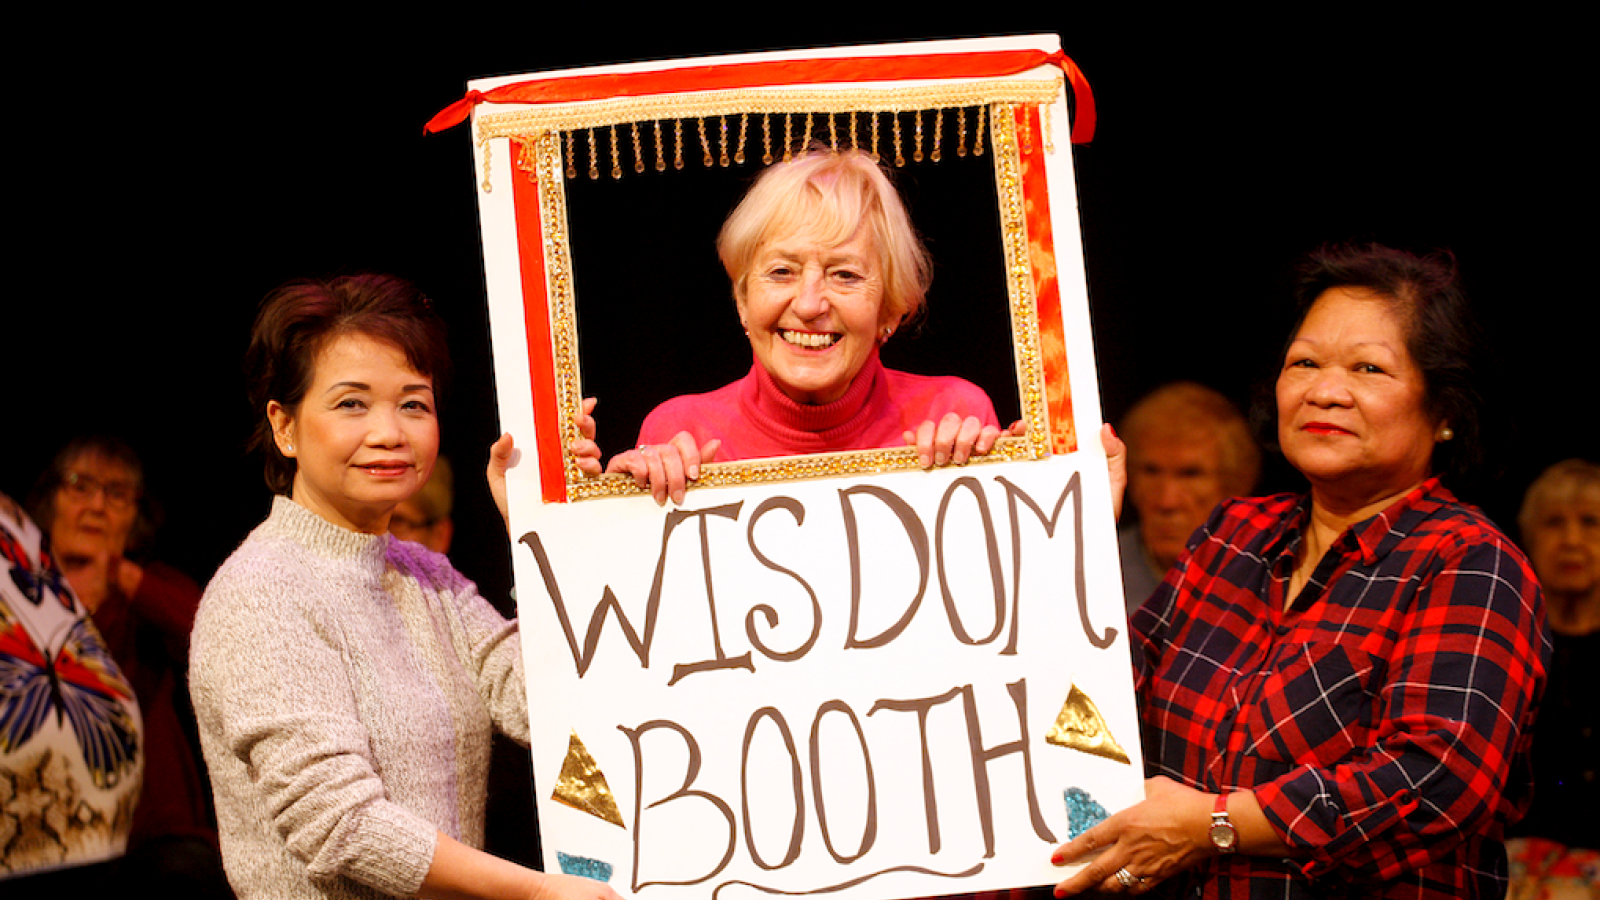 Wisdom booth